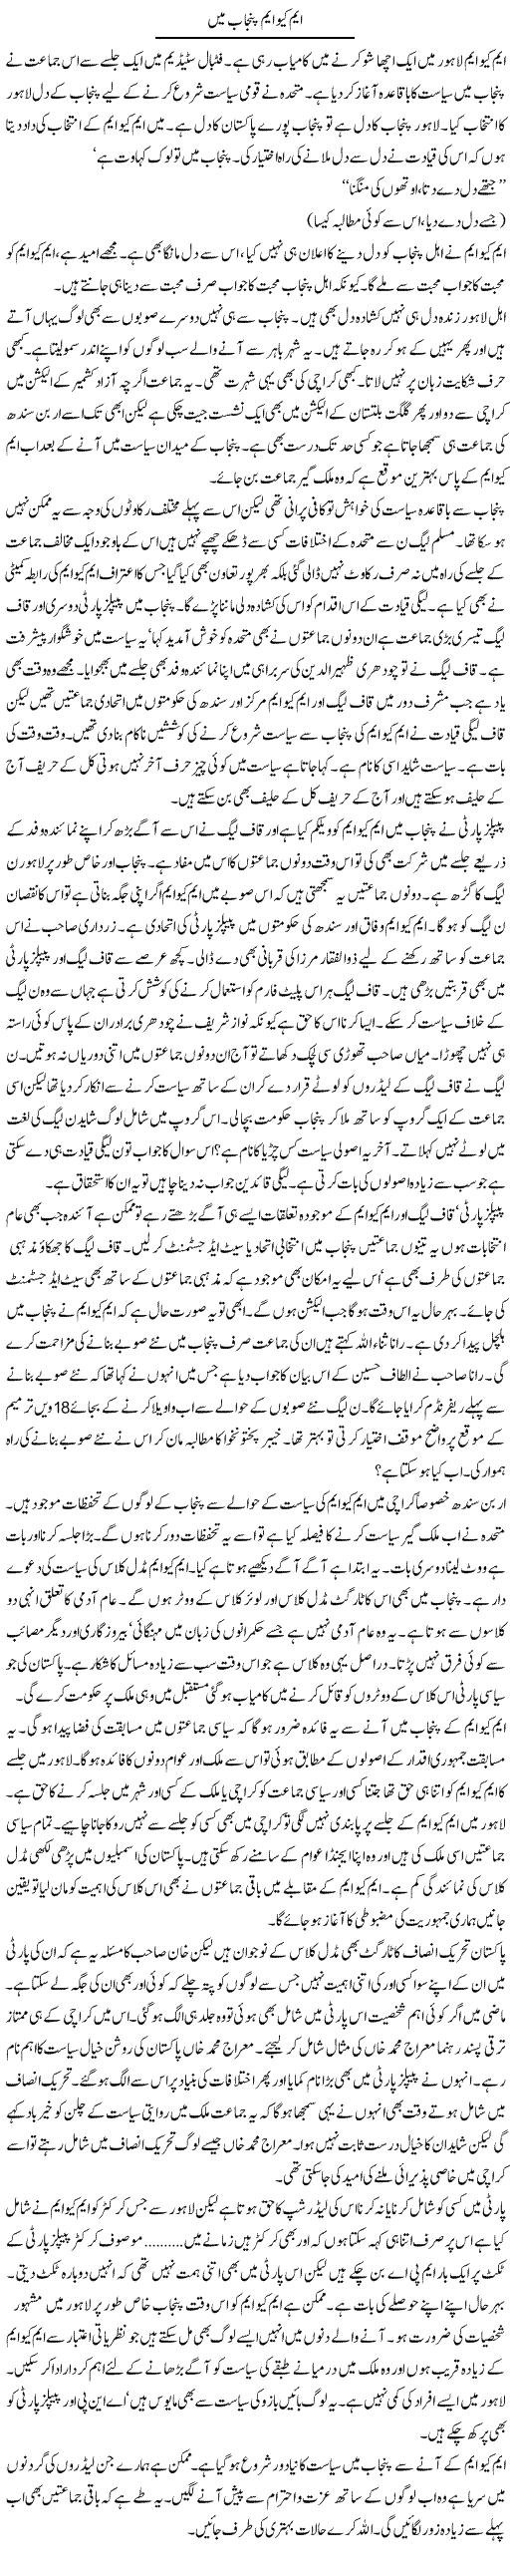 MQM In Punjab Express Column Iyaz Khan 12 April 2011